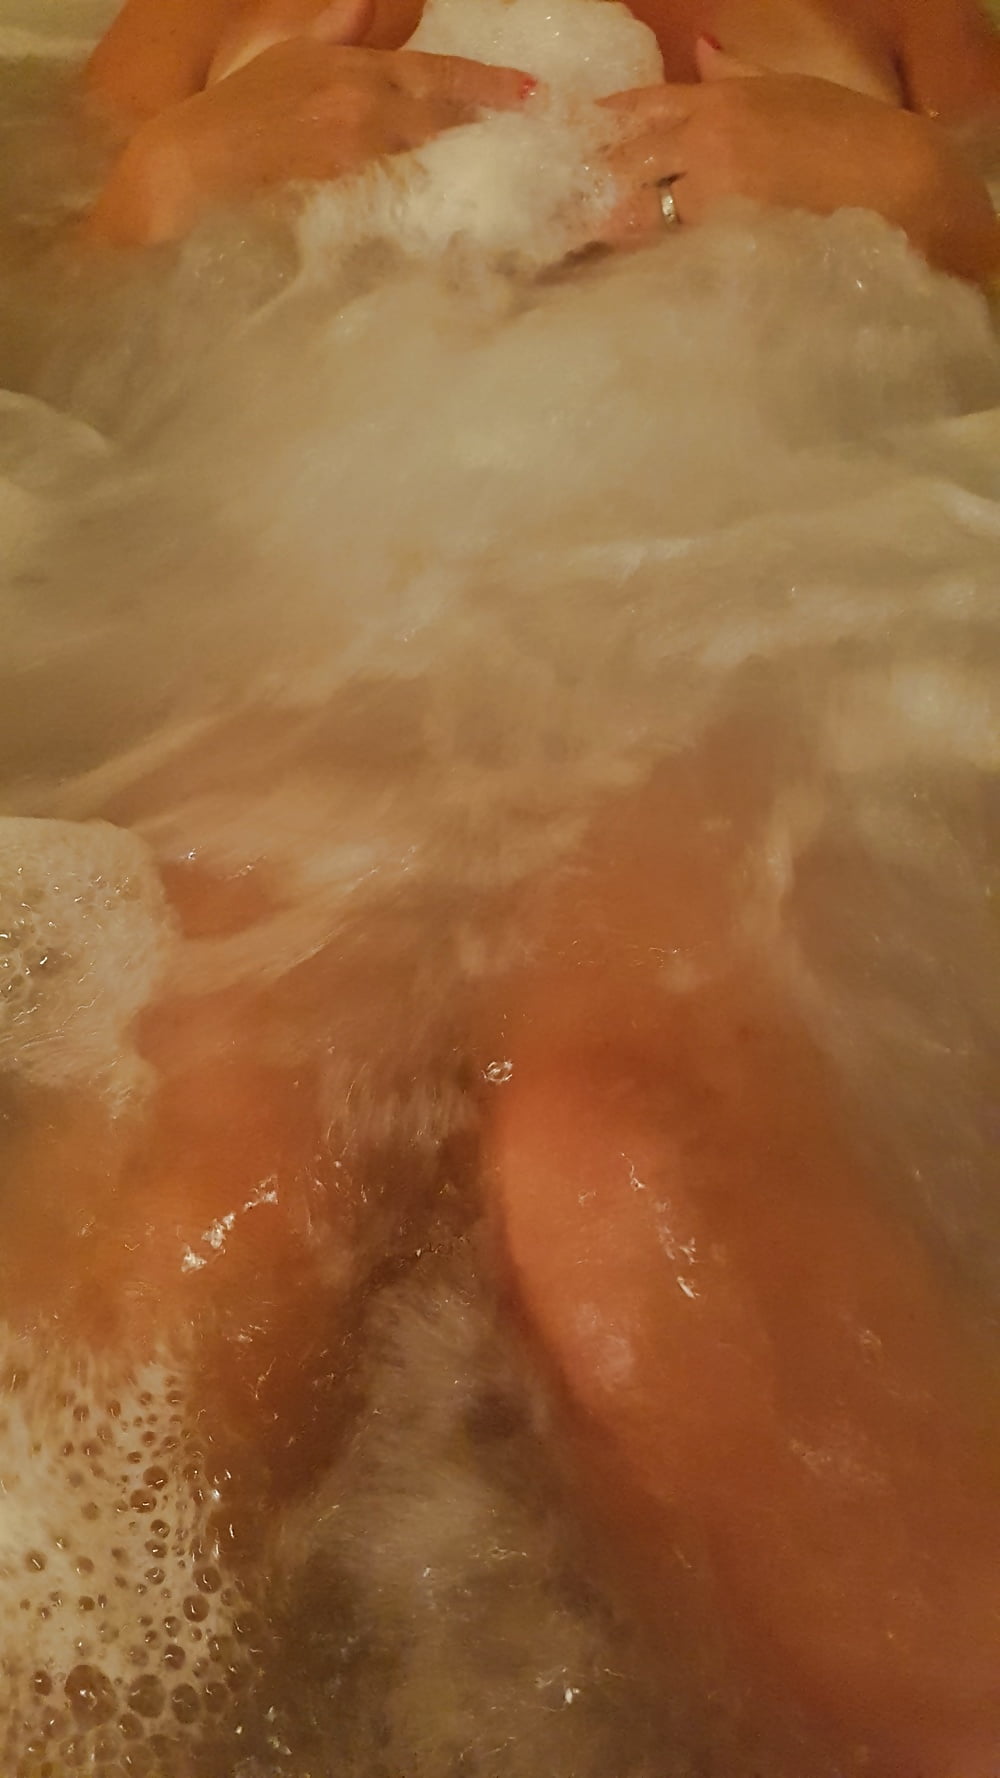 Hot tub tits